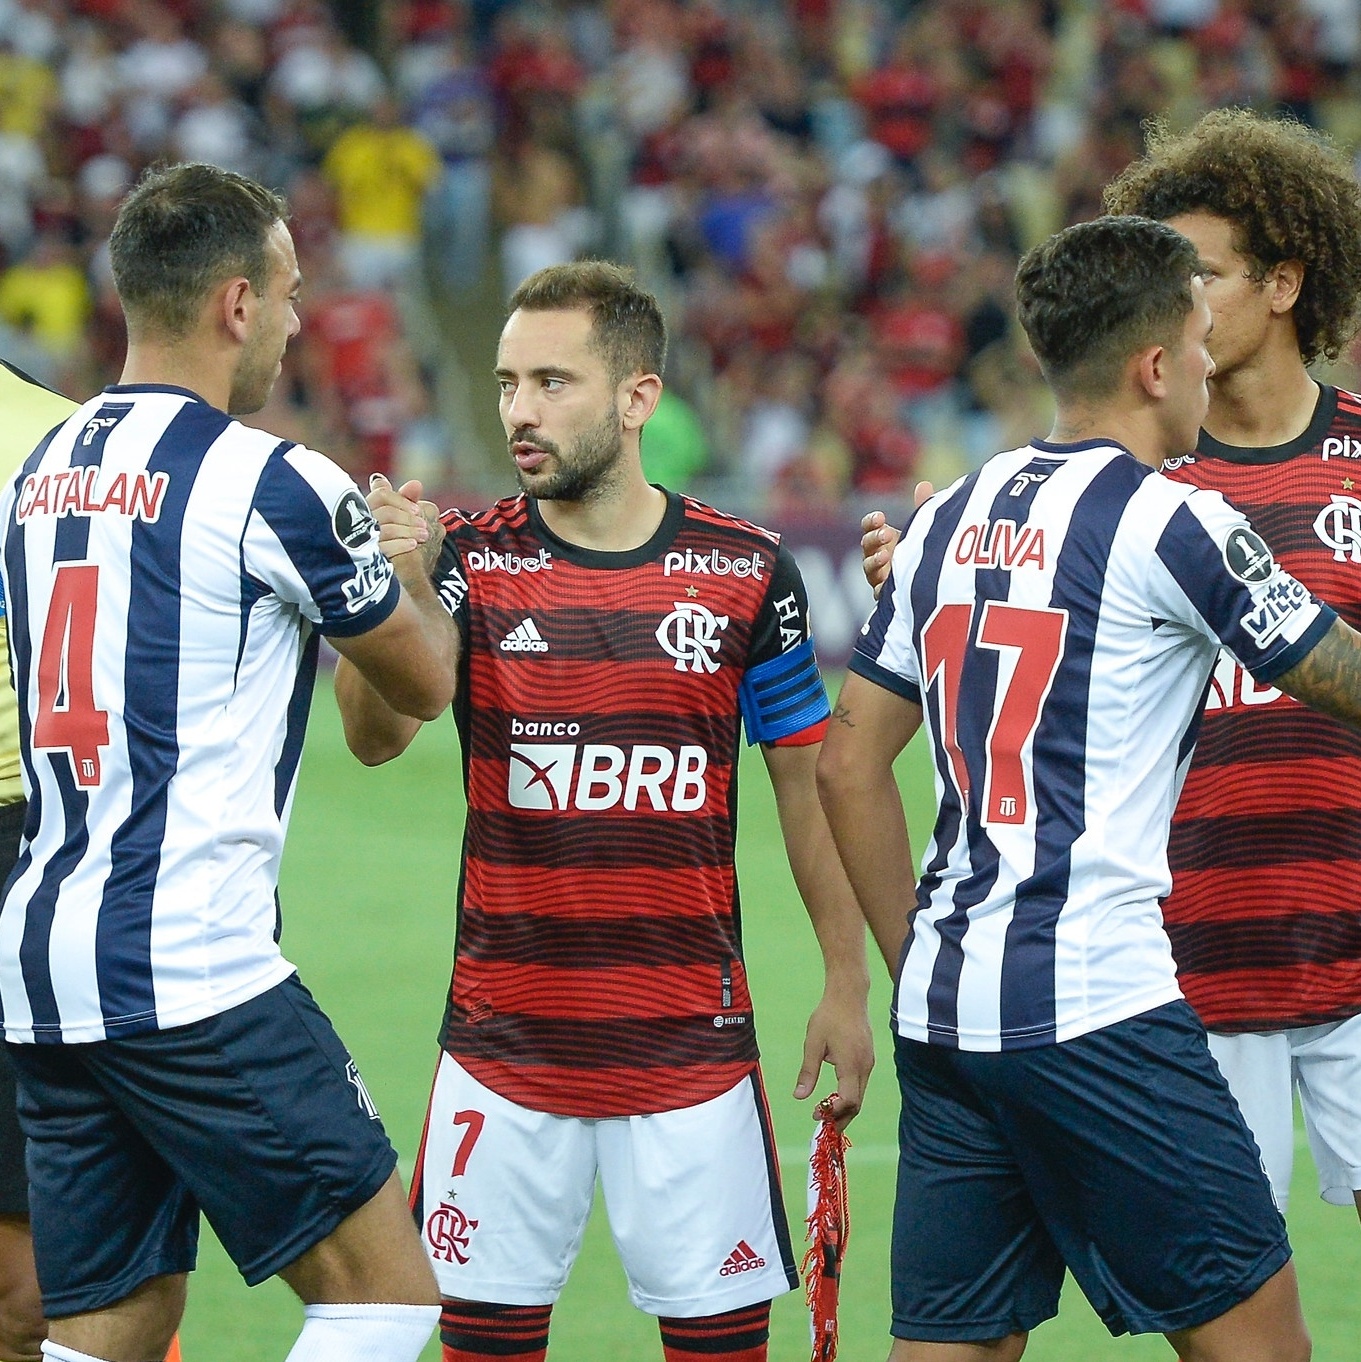 Libertadores: Flamengo empata com o Talleres e fica perto de vaga